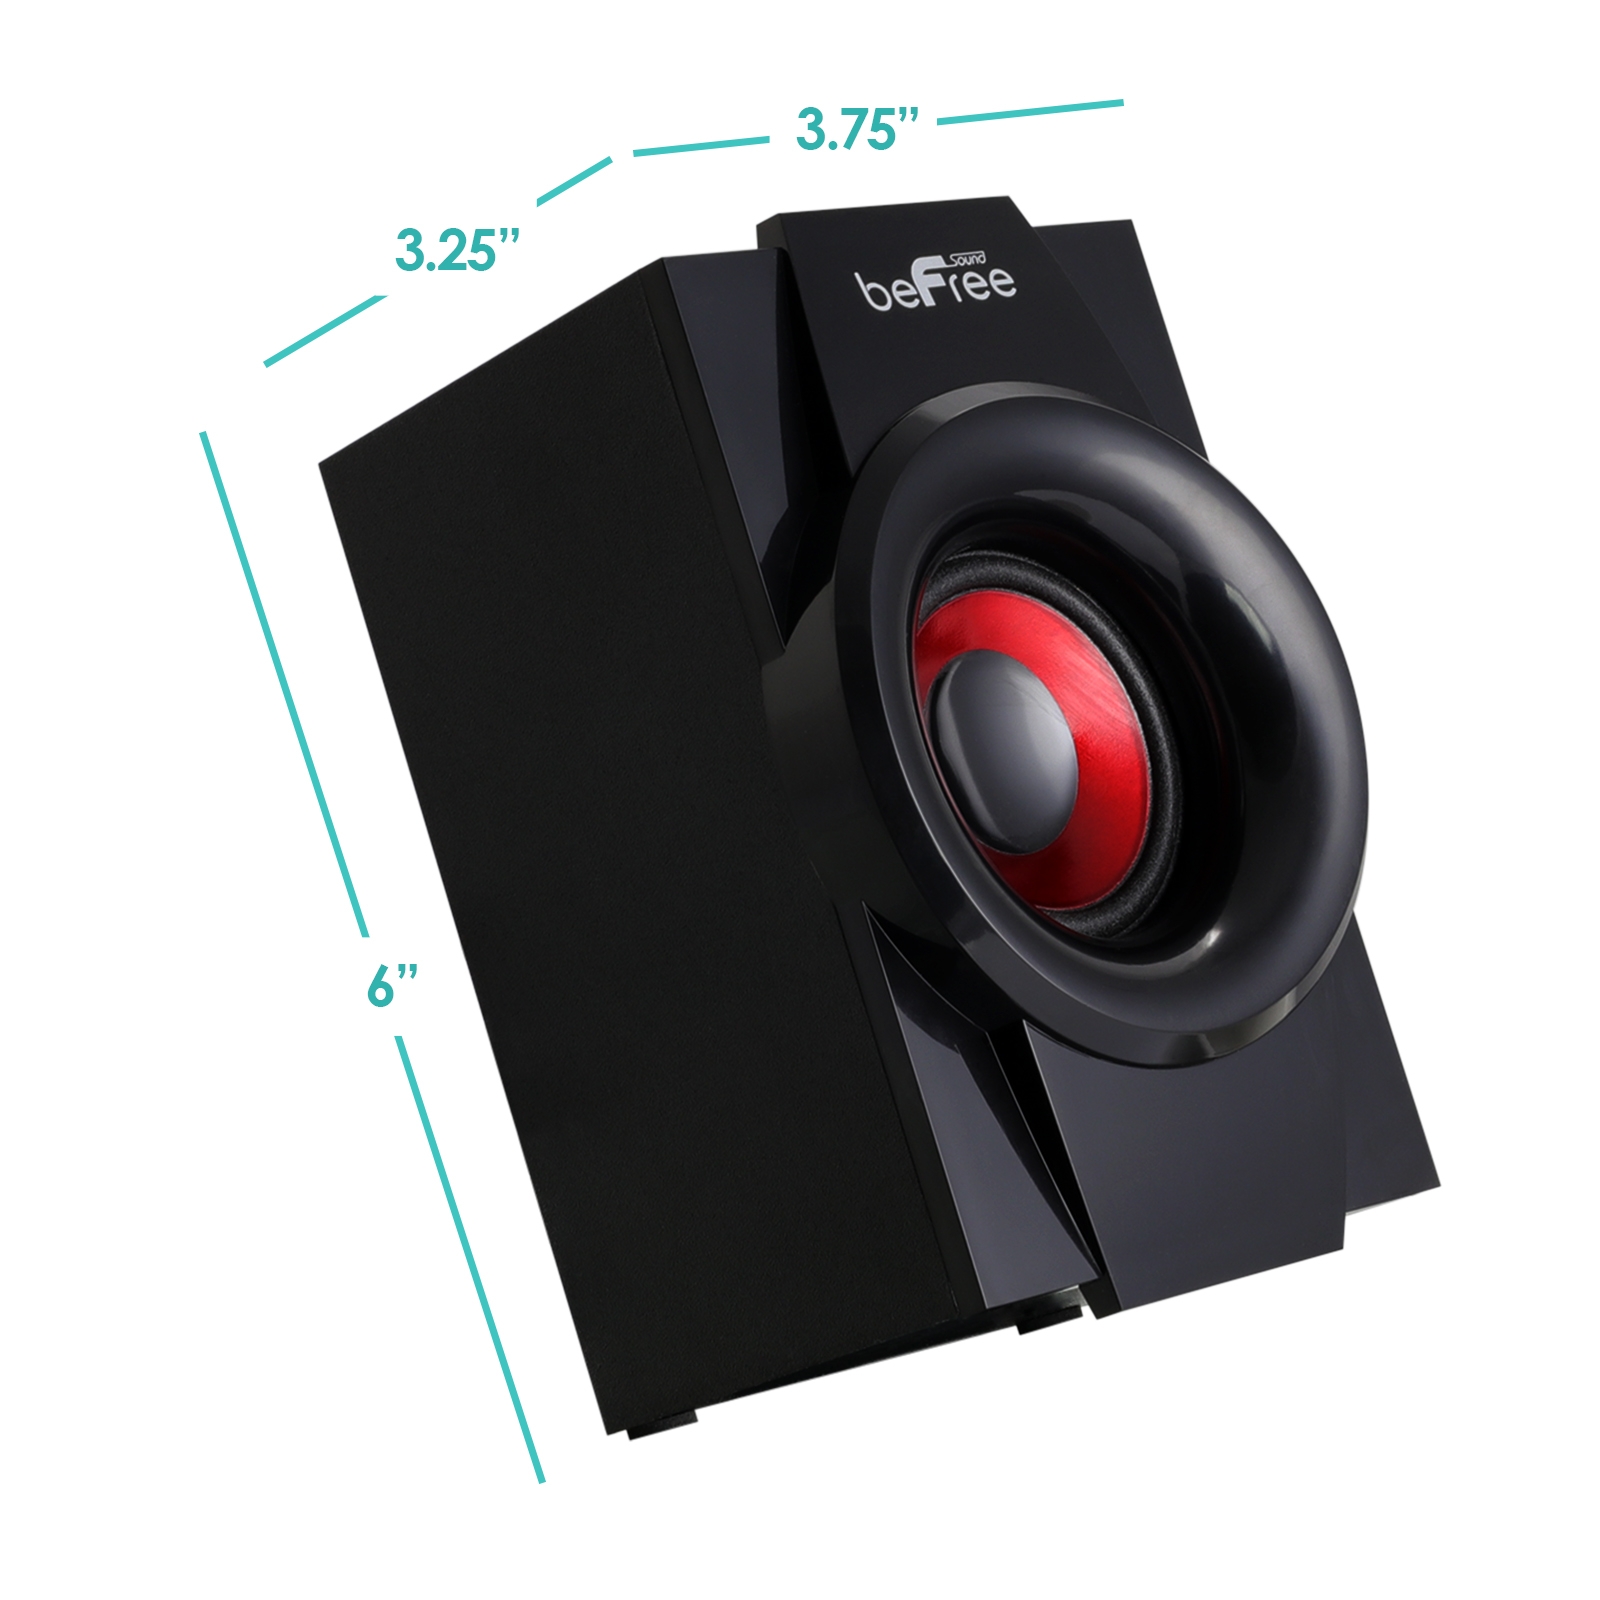 beFree Sound BFS-410 5.1 Channel Surround Sound Bluetooth Speaker System in Red - image 4 of 6